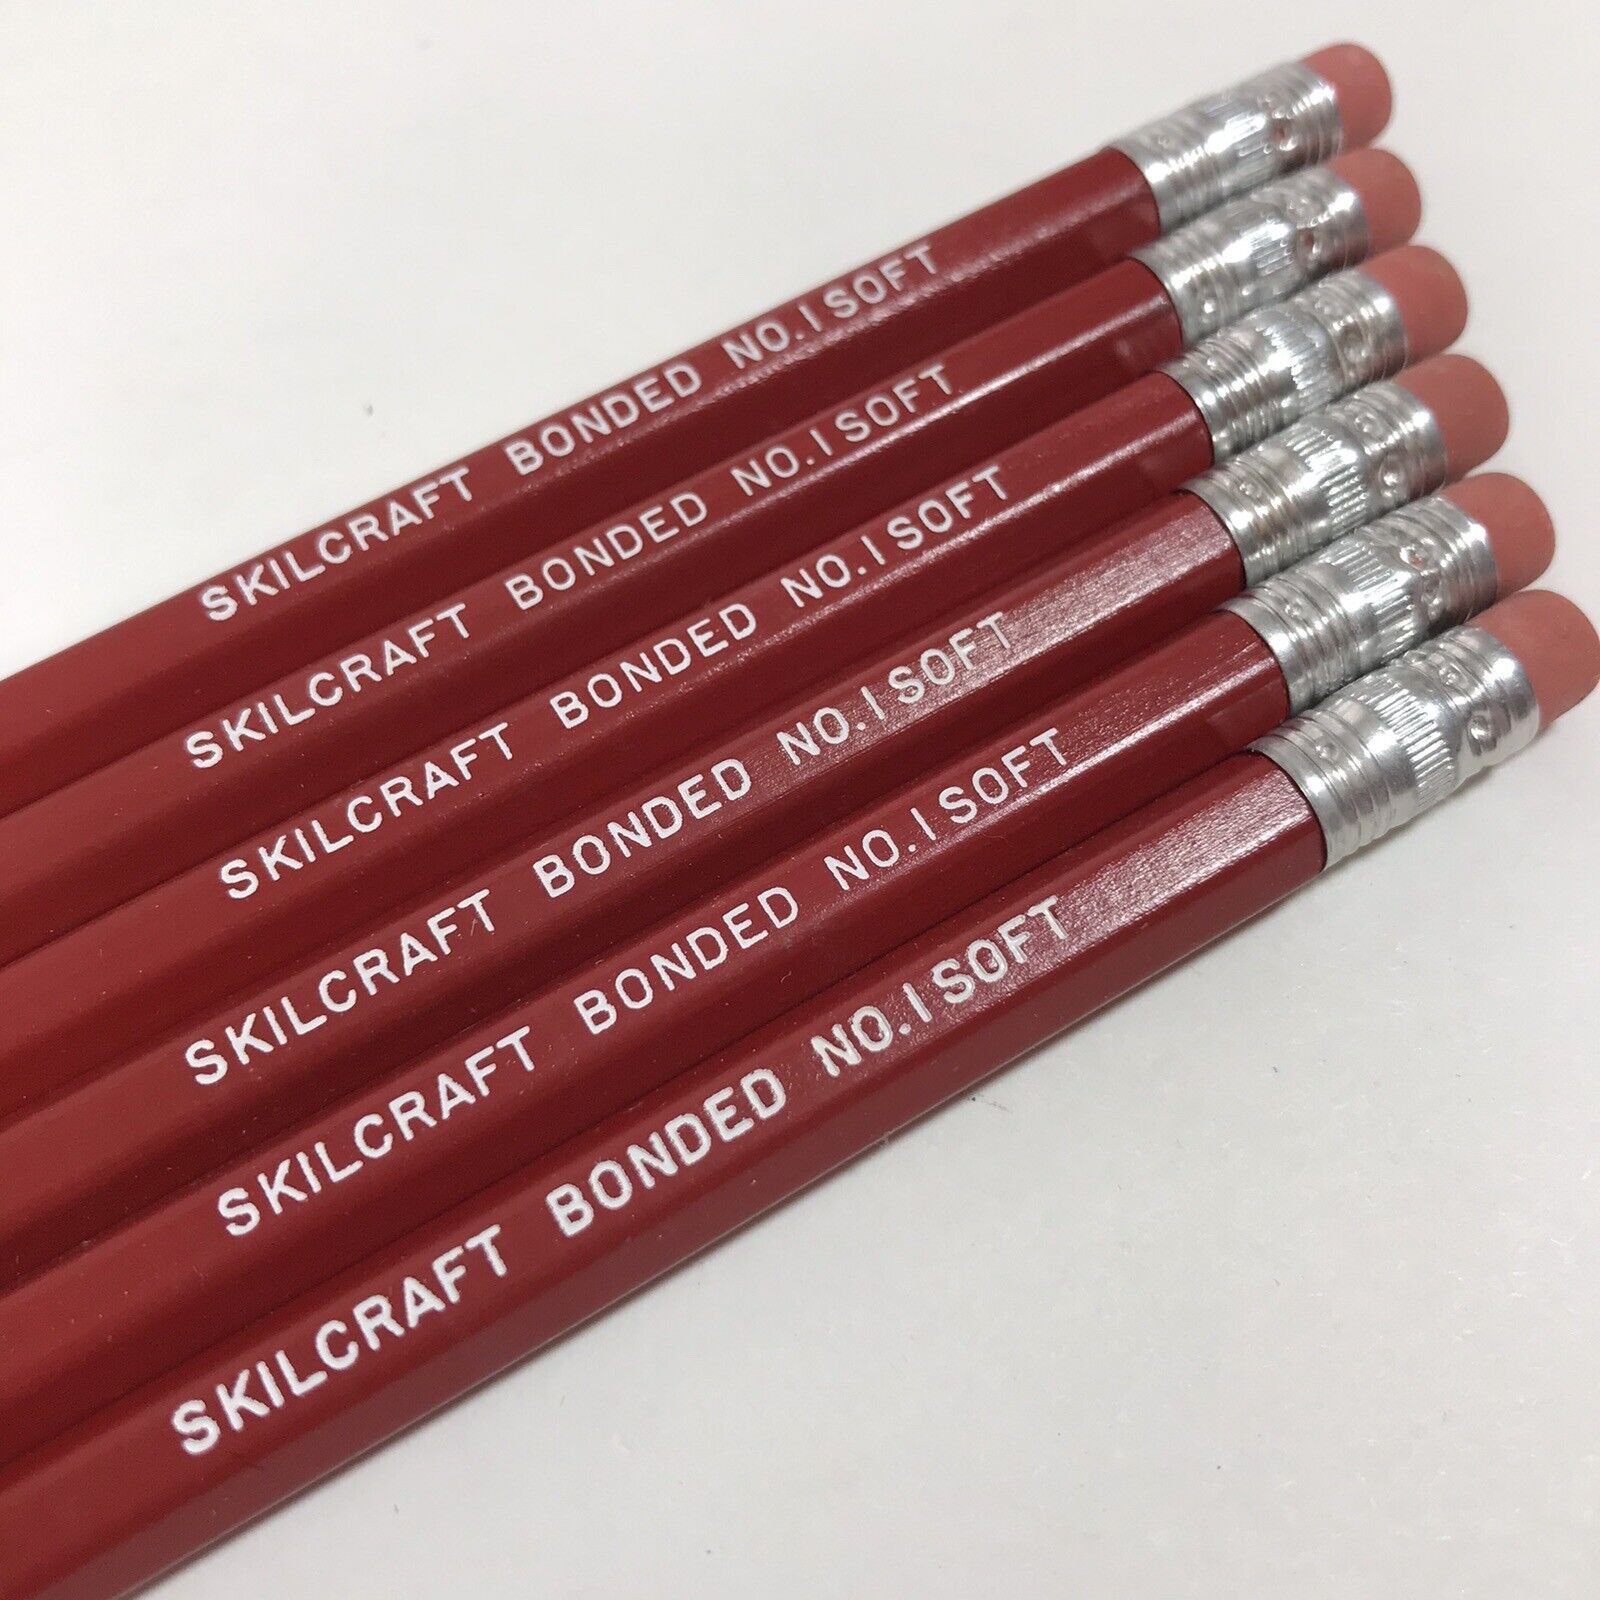 NEW 6 SKILCRAFT Bonded NO. 1 Soft Pencils Red Vintage Drafting Unsharpened